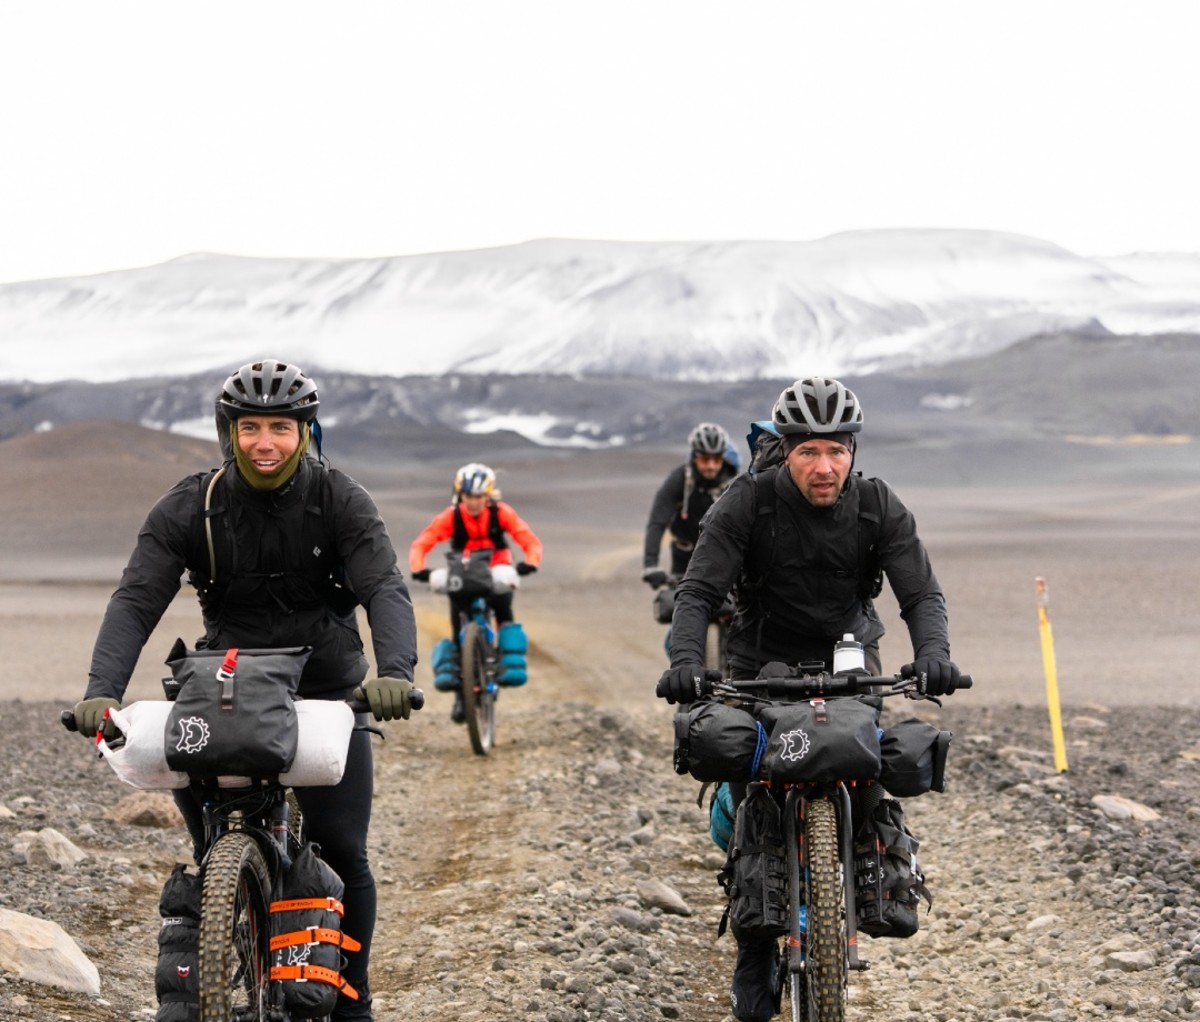 Chris Burkard, Emily Batty, Adam Morka, And Eric Batty Biking With Glaciers In The Background.